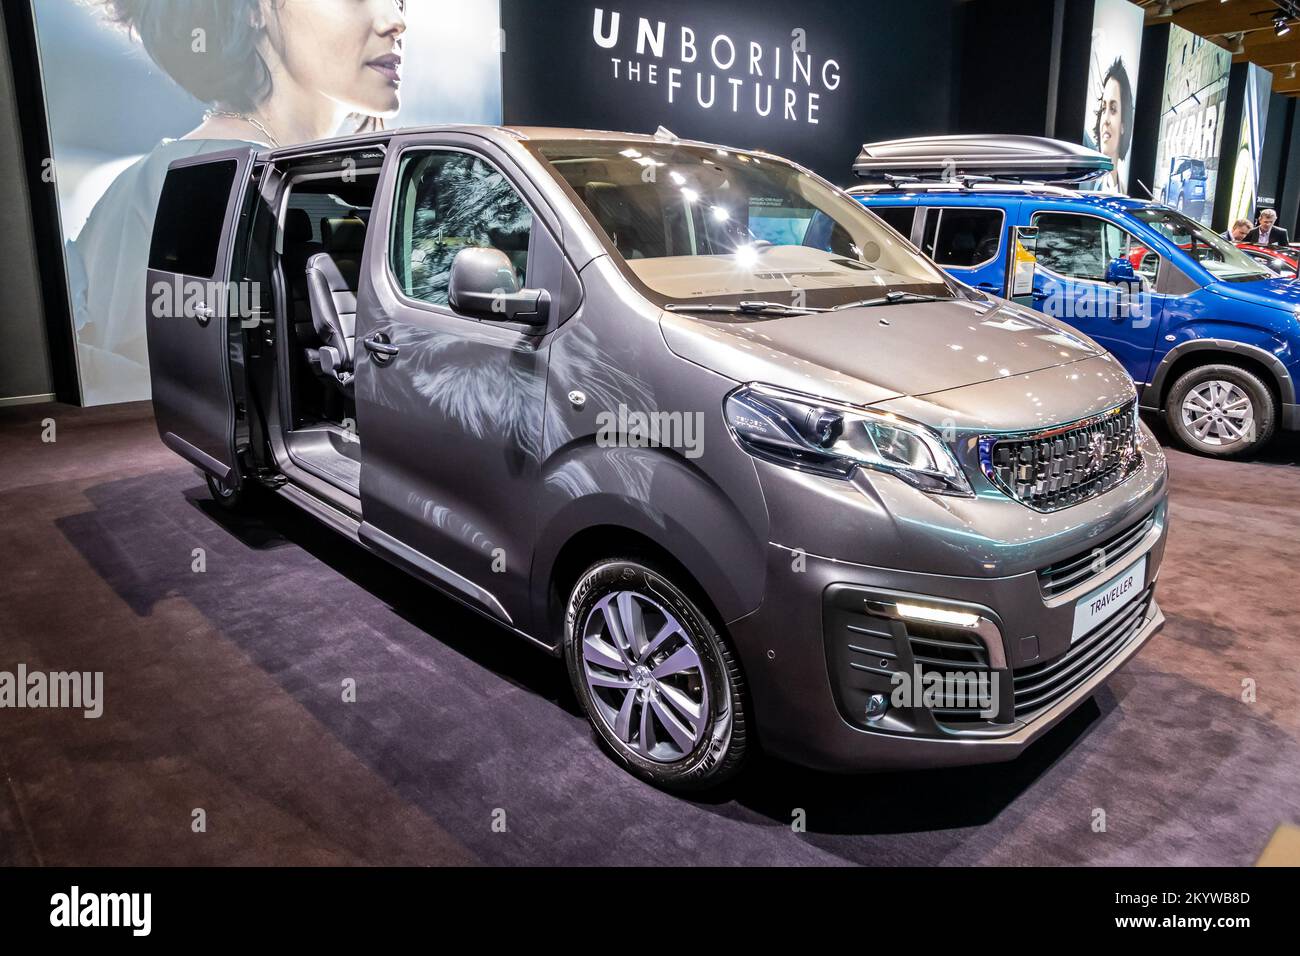 Peugeot Traveller van showcased at the Autosalon Motor Show. Brussels, Belgium - January 9, 2020. Stock Photo